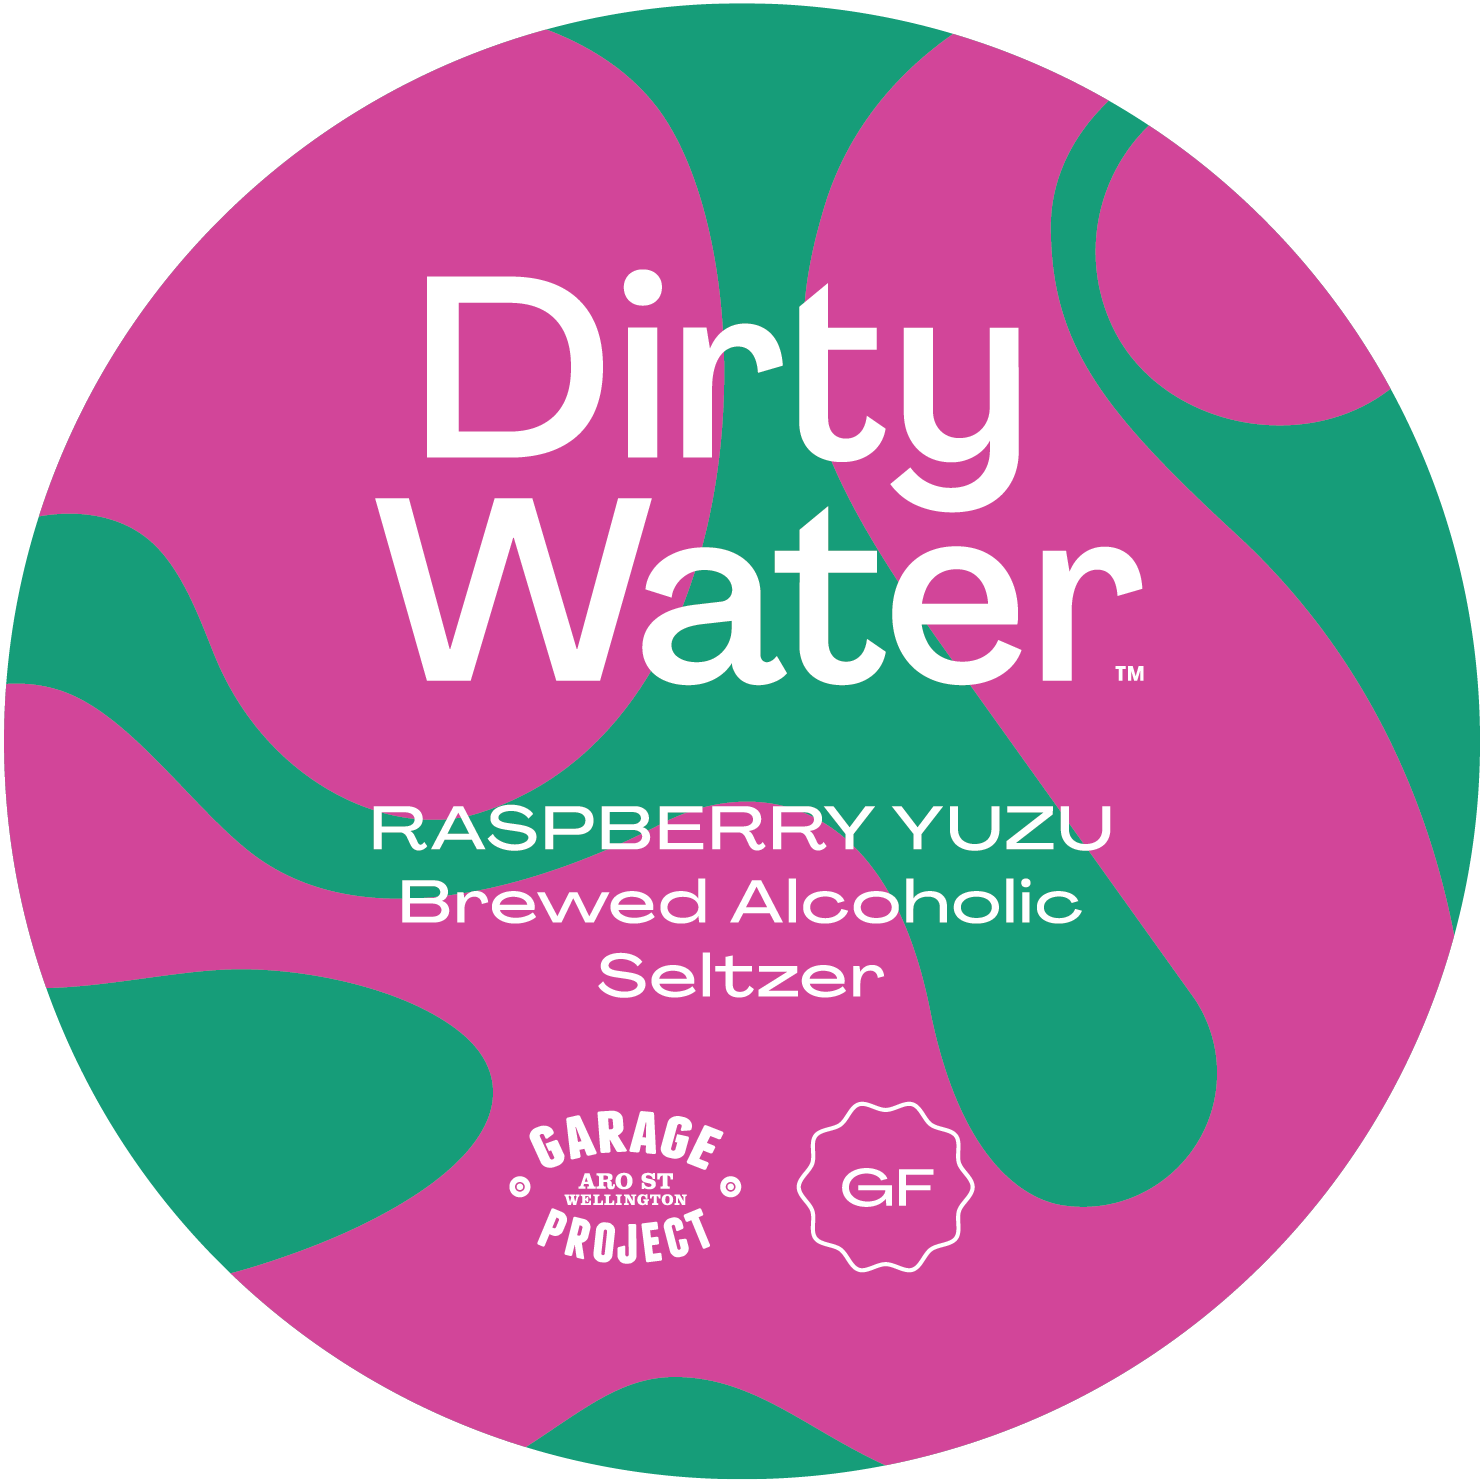 Dirty Water Raspberry Yuzu tap badge